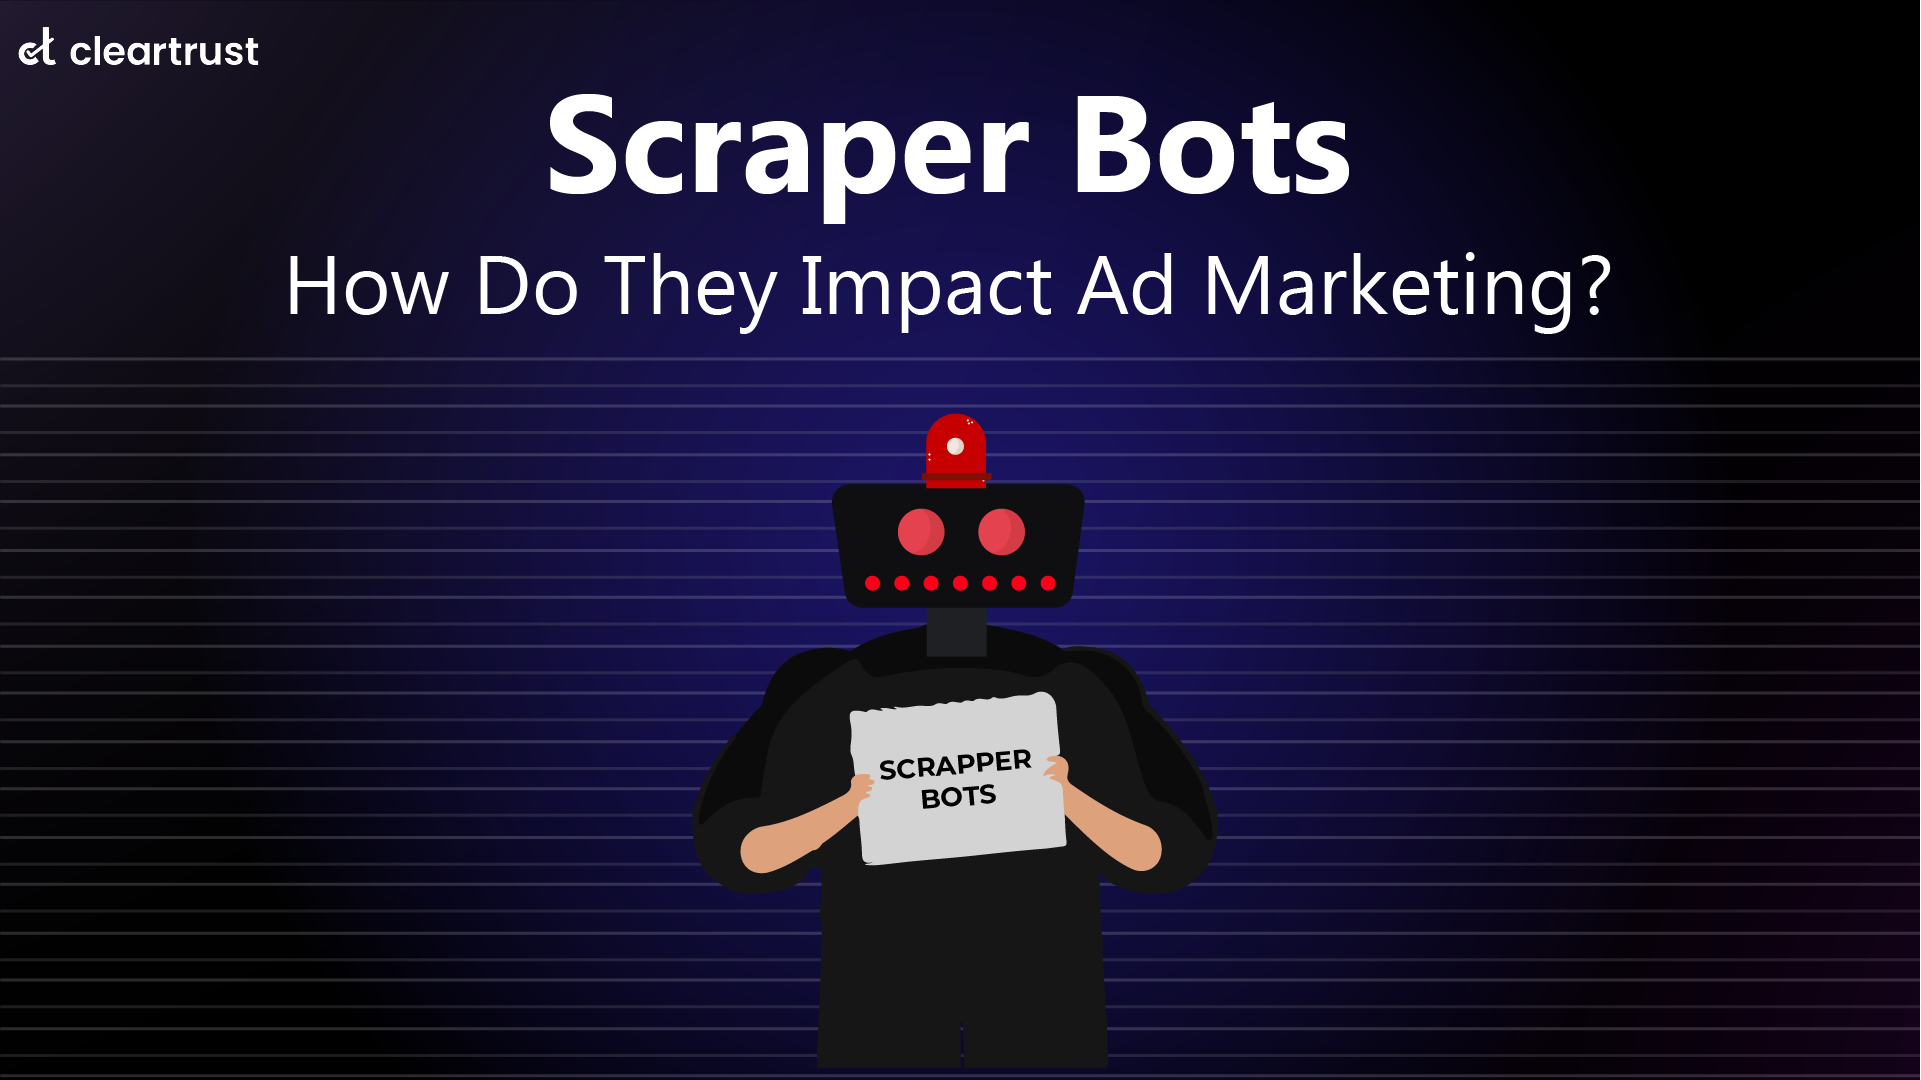 Scraper bots - How do they impact ad marketing?